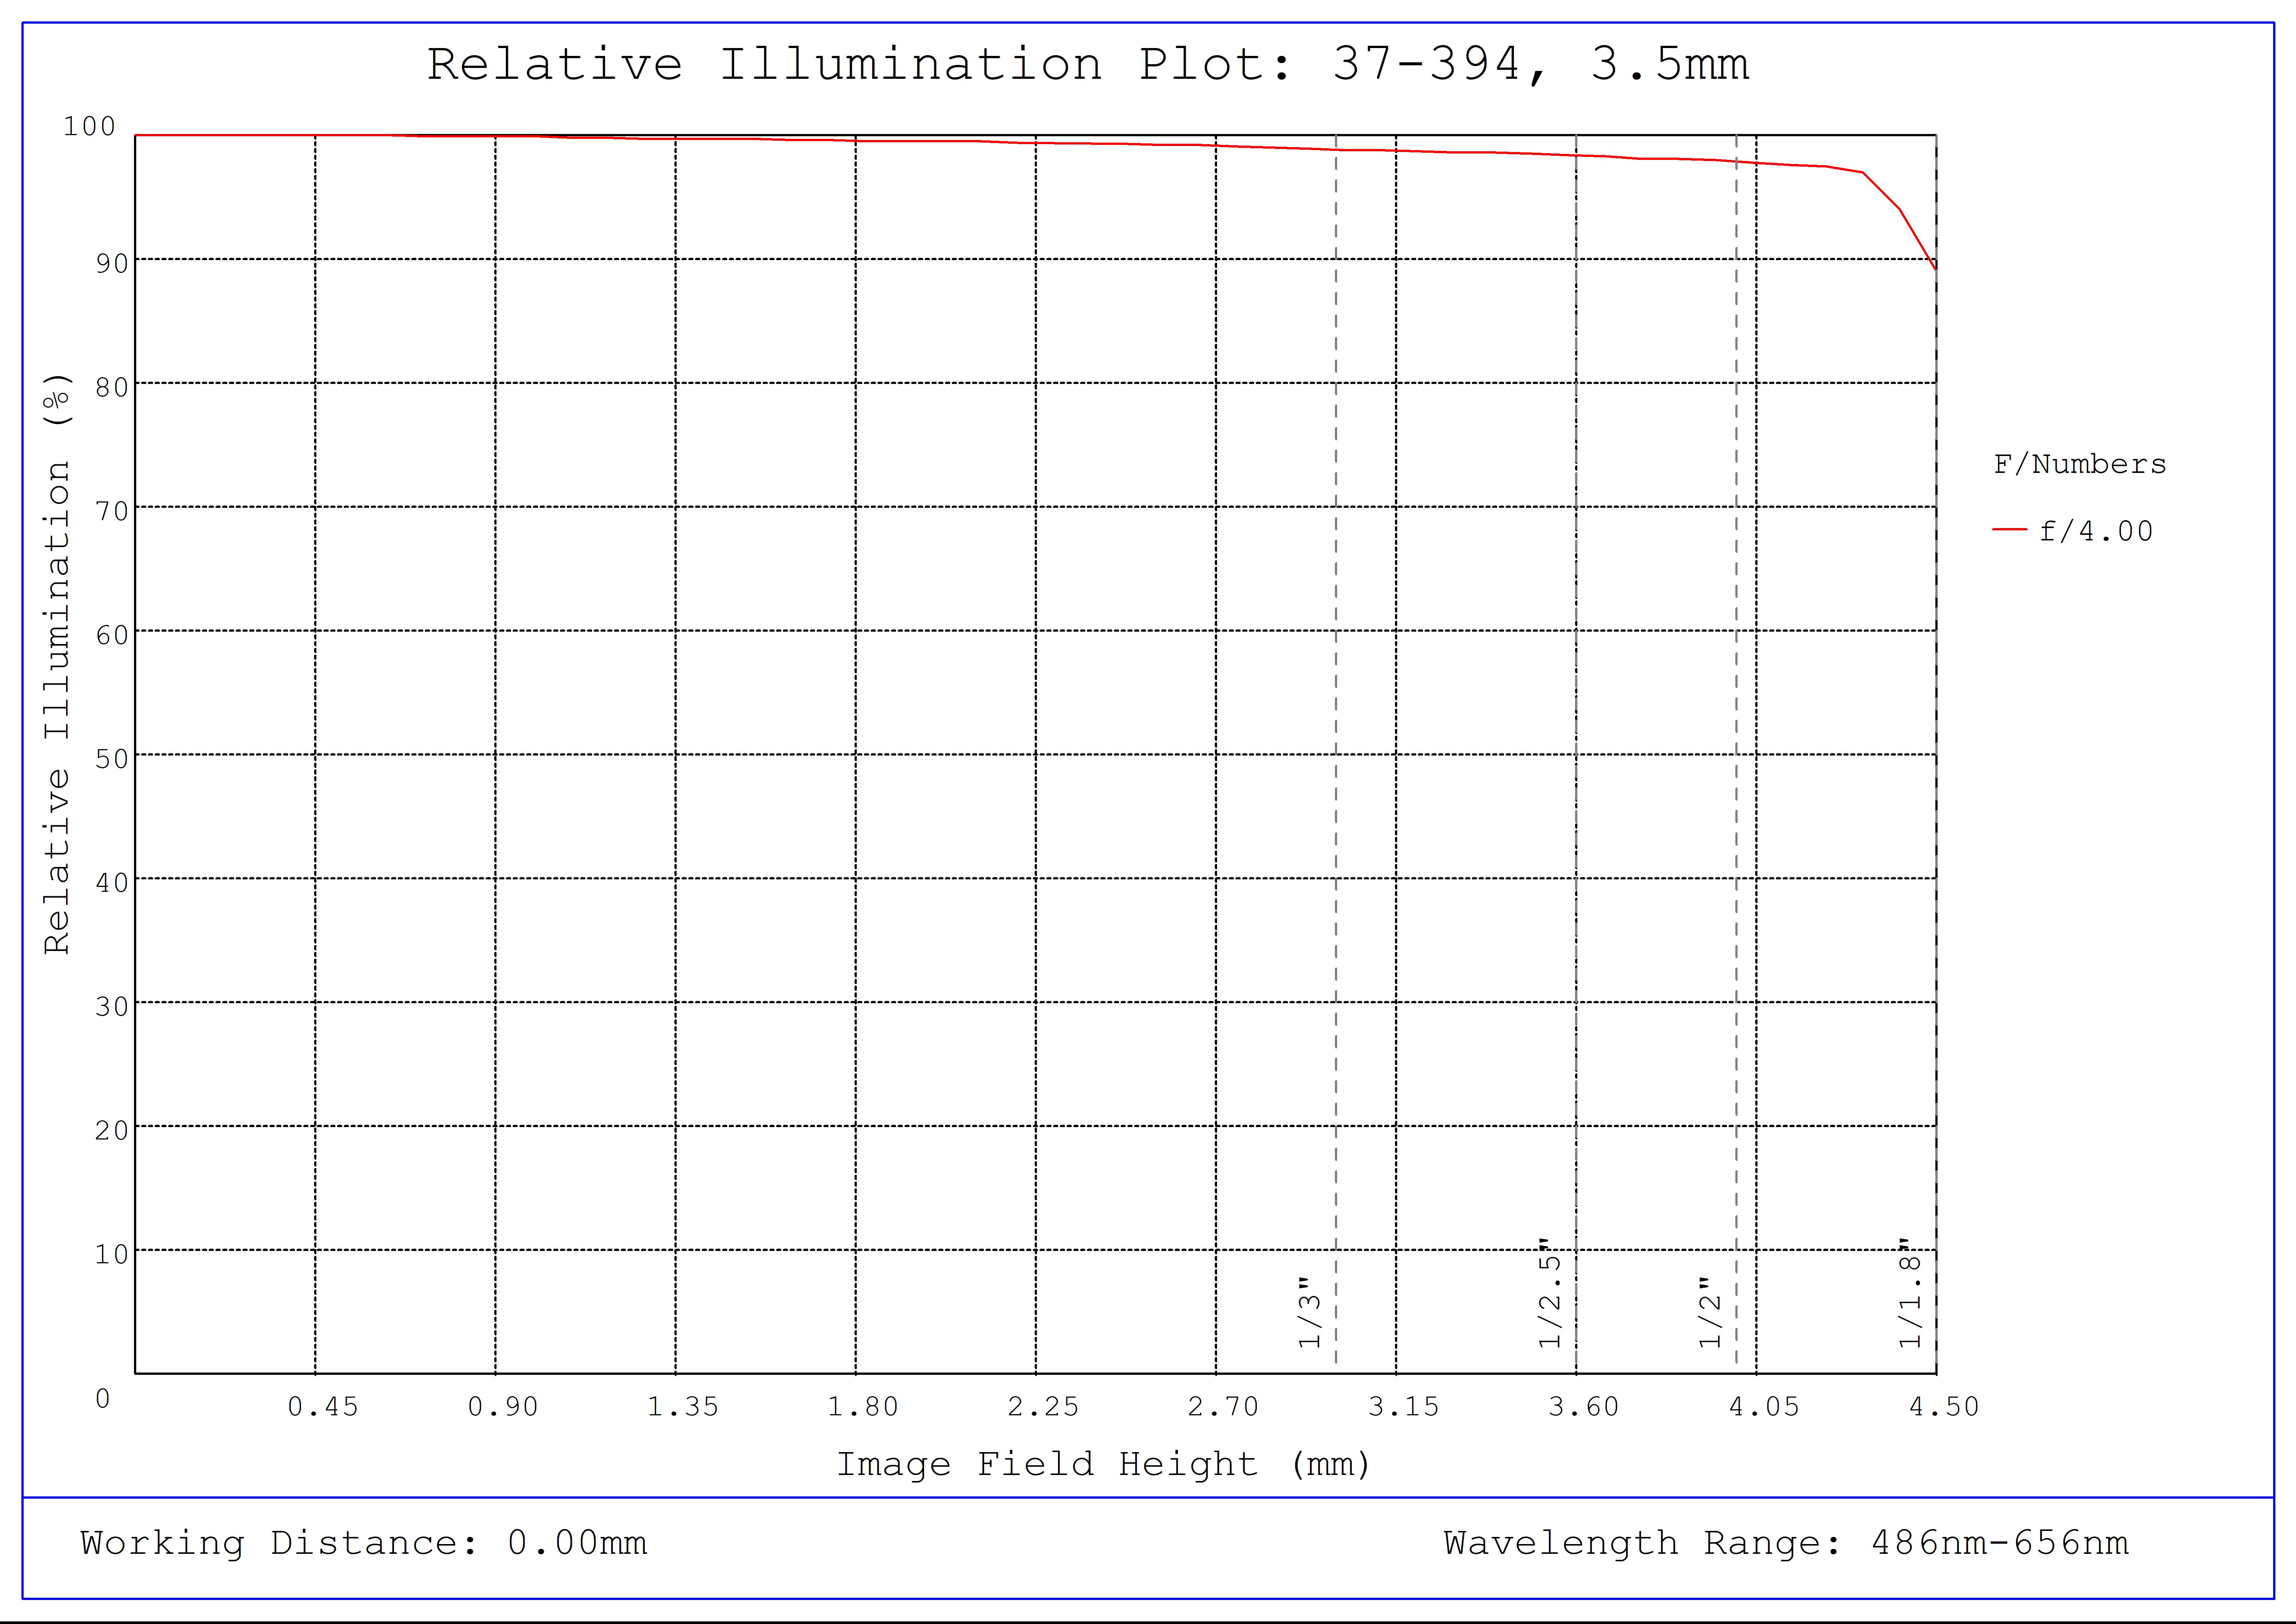 #37-394, 3.5mm, f/4 Cr Series Fixed Focal Length Lens, Relative Illumination Plot